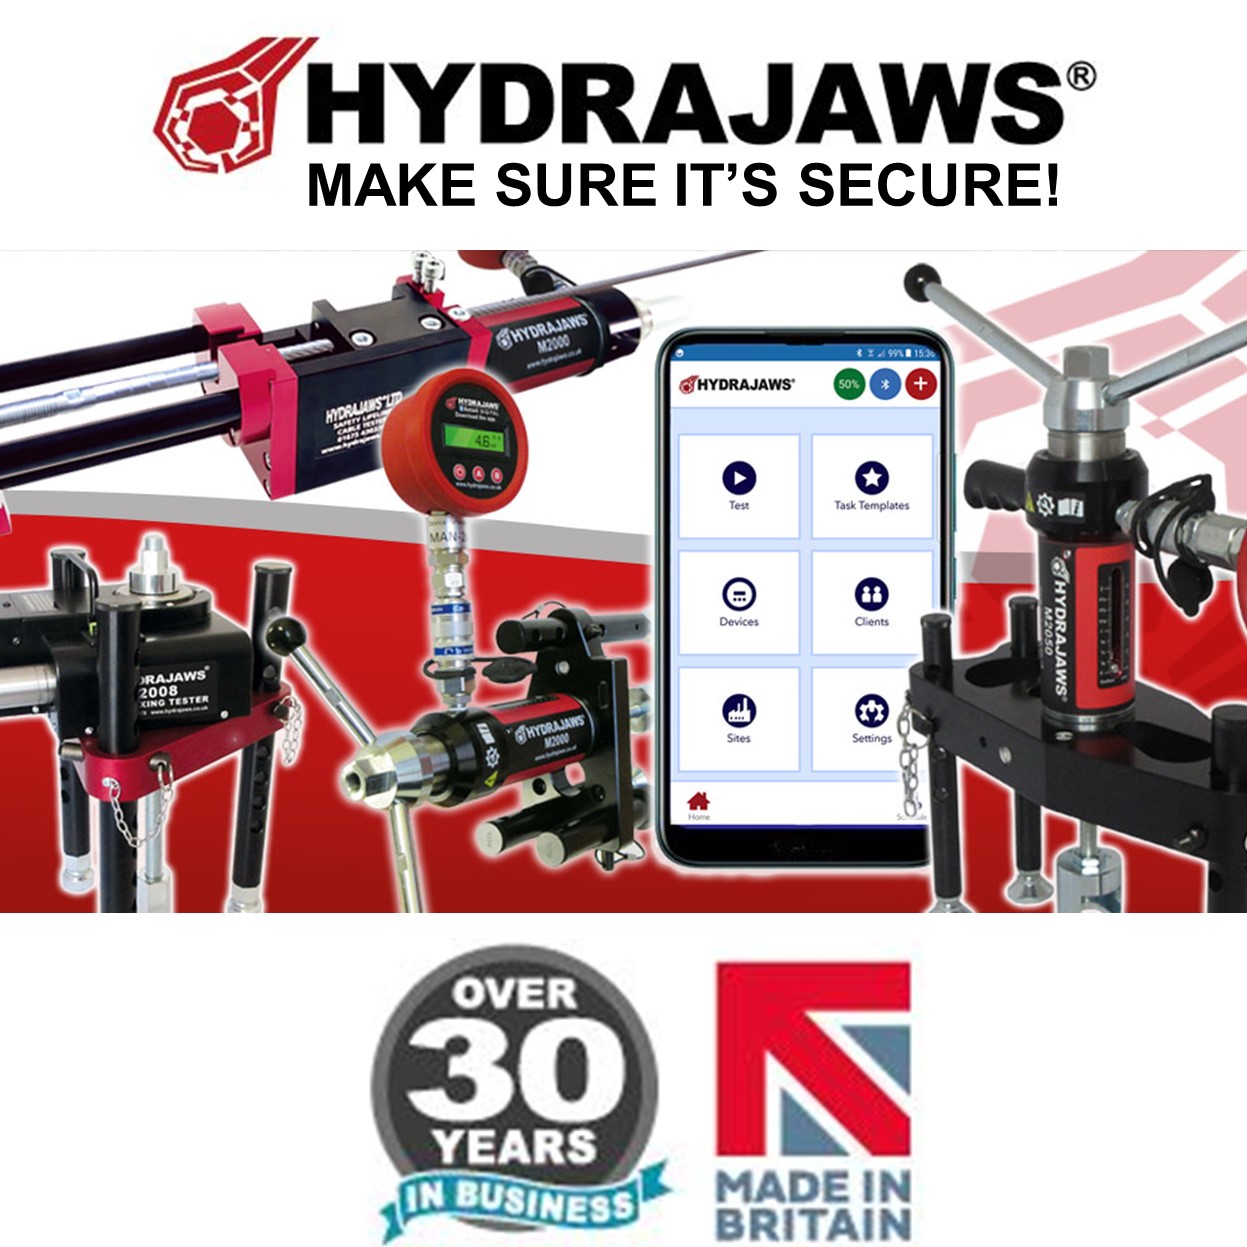 Main image for Hydrajaws Ltd